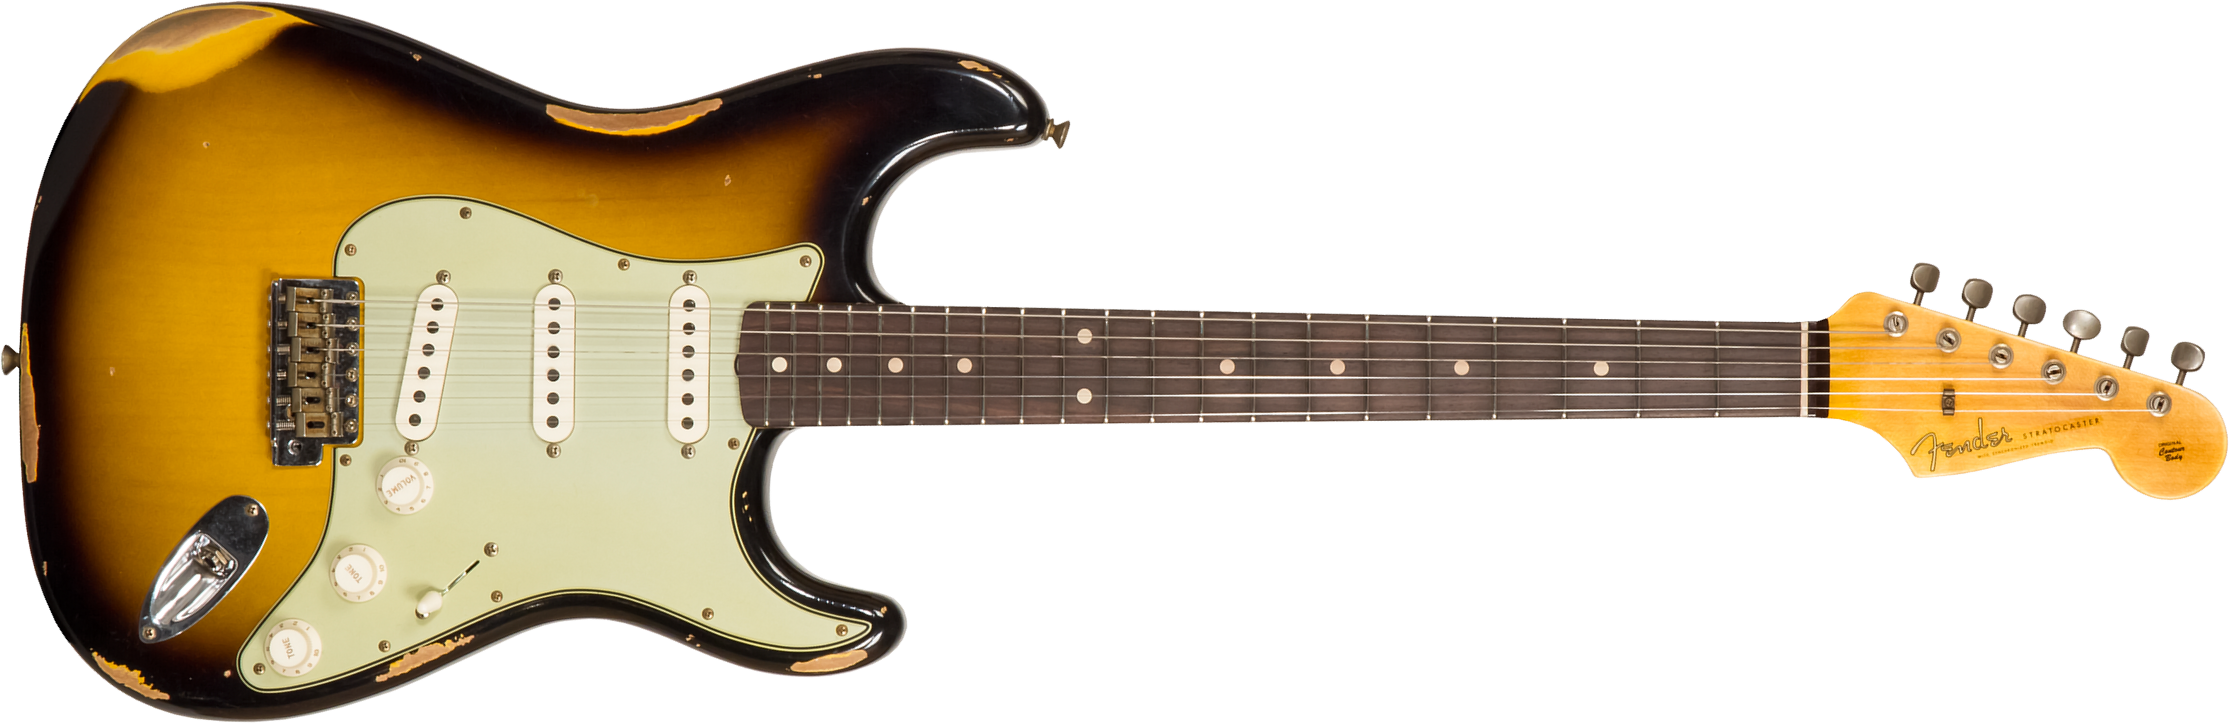 Fender Custom Shop Strat 1959 3s Trem Rw #r117661 - Relic 2-color Sunburst - Elektrische gitaar in Str-vorm - Main picture